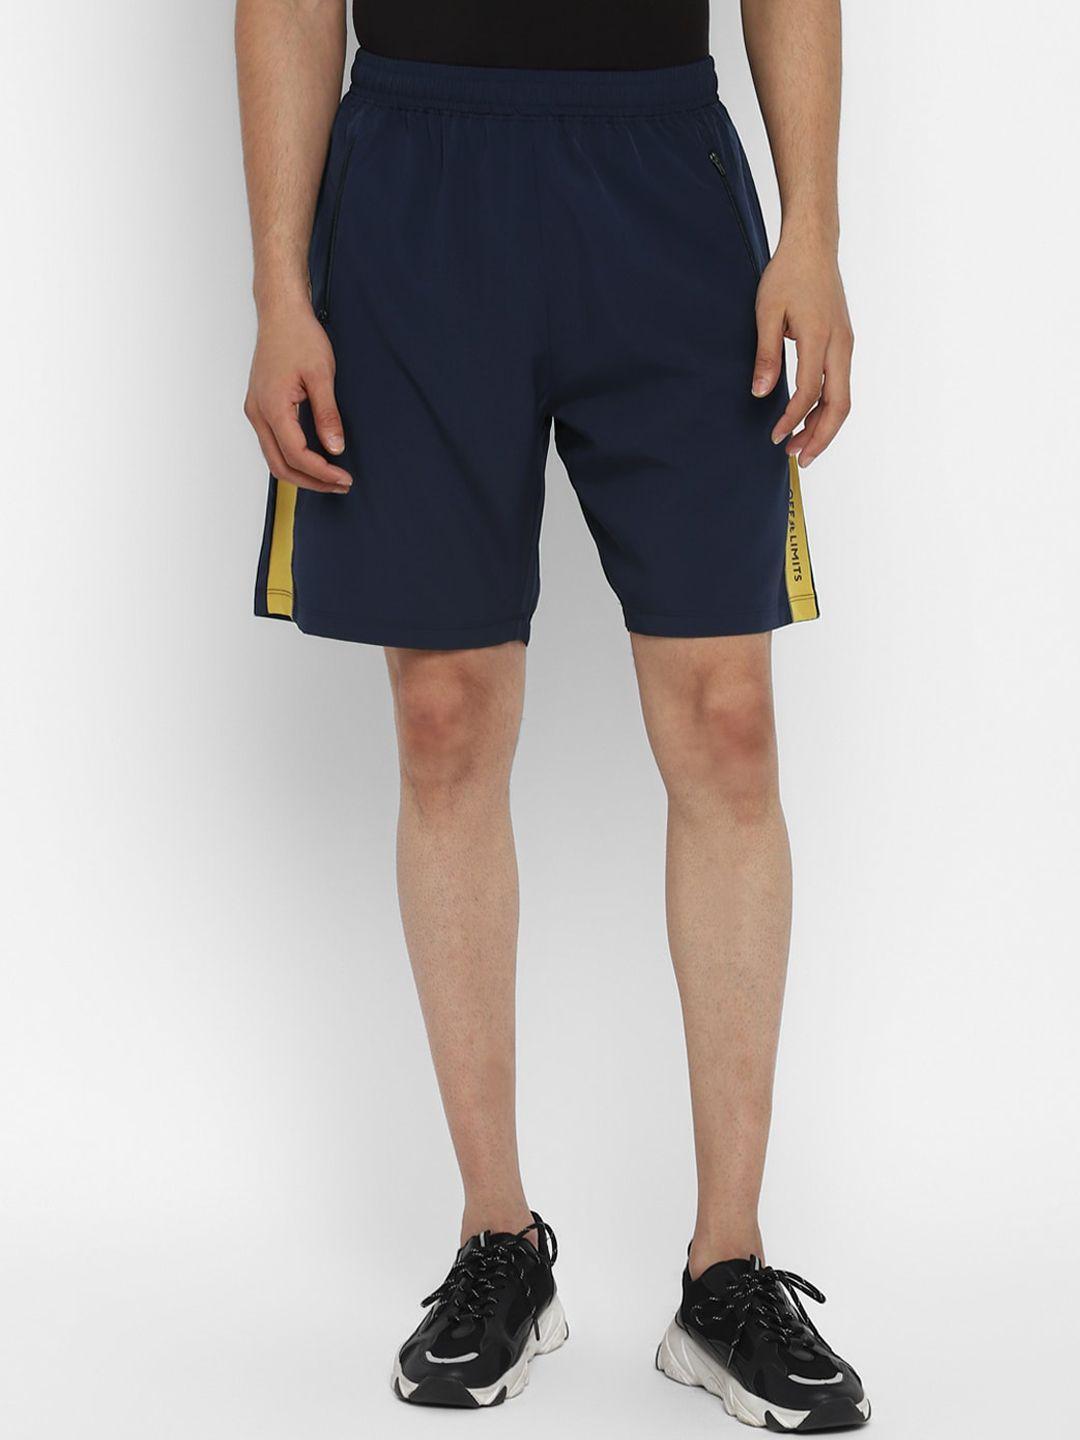 off-limits-men-navy-blue-solid-regular-fit-sports-shorts